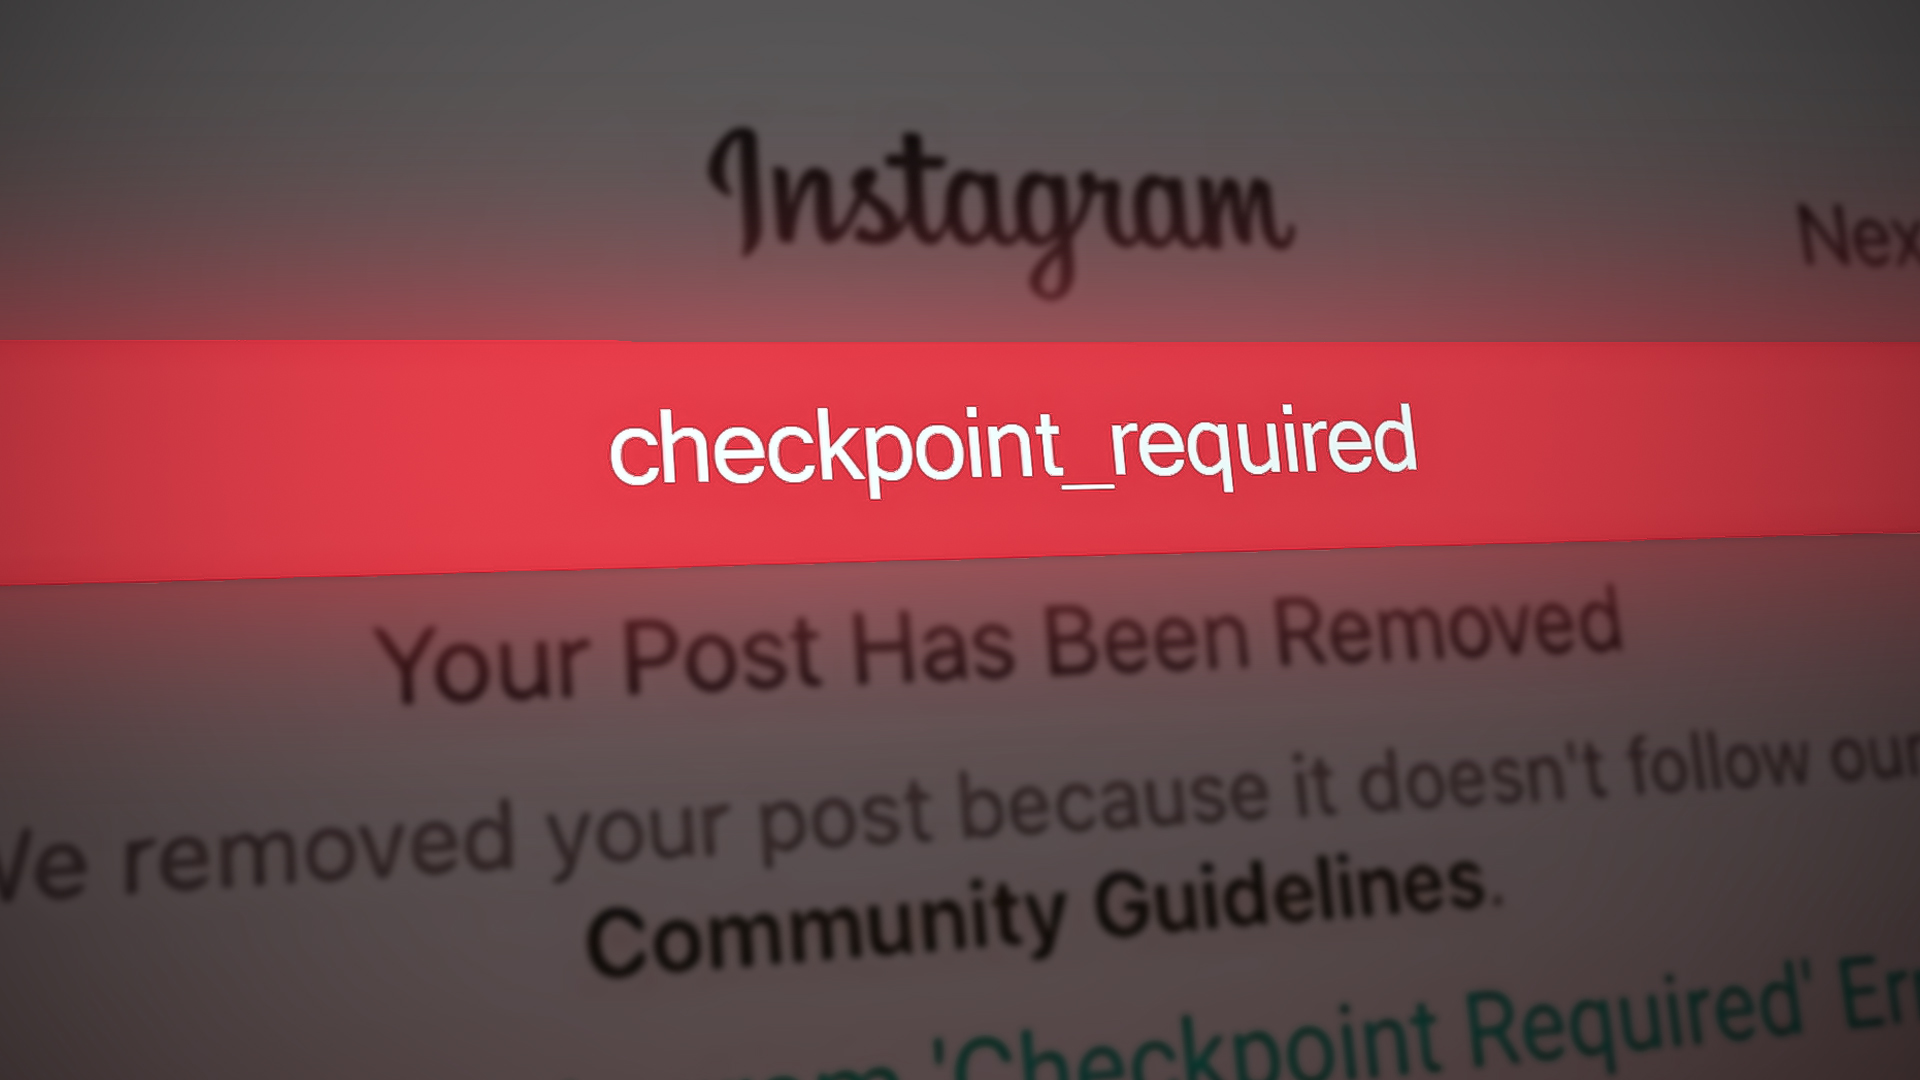 checkpoint_required Error in Instagram